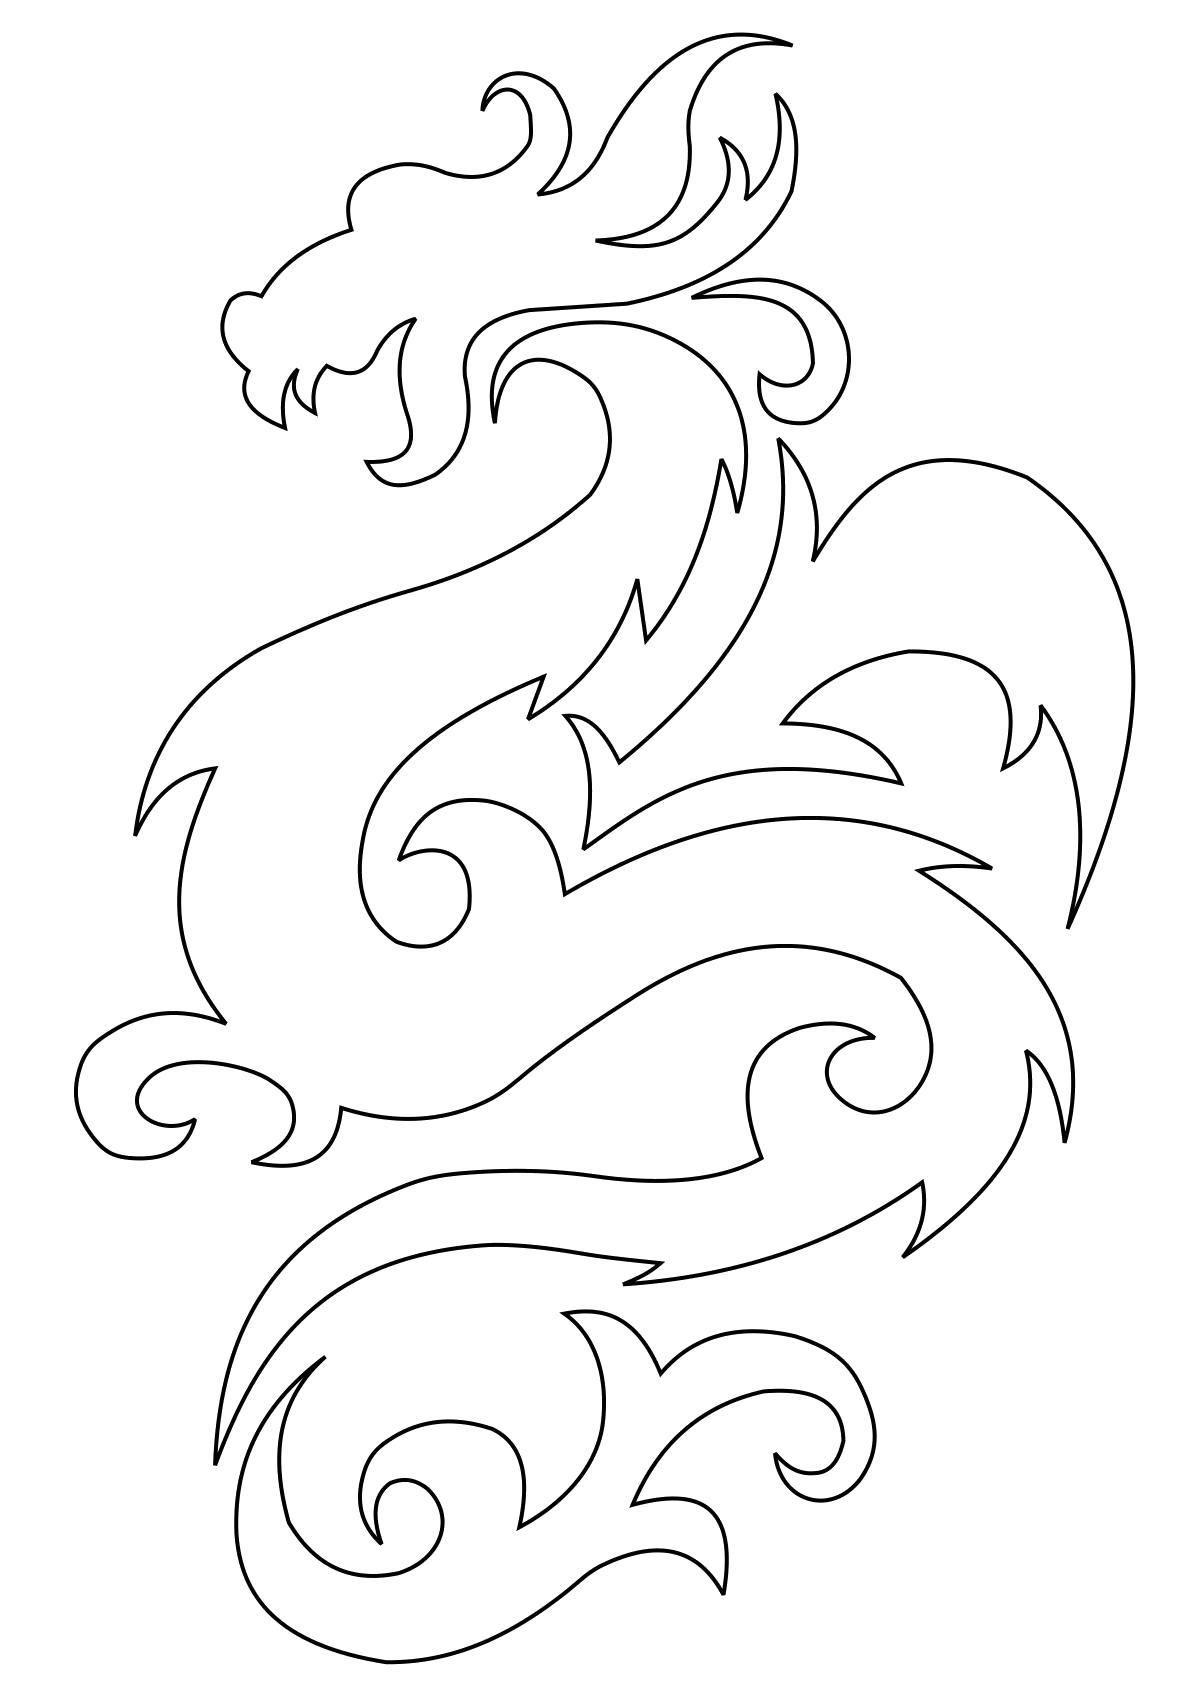 Название: Раскраска рисунки японских драконов. Категория: мифические существа. Теги: дракон.